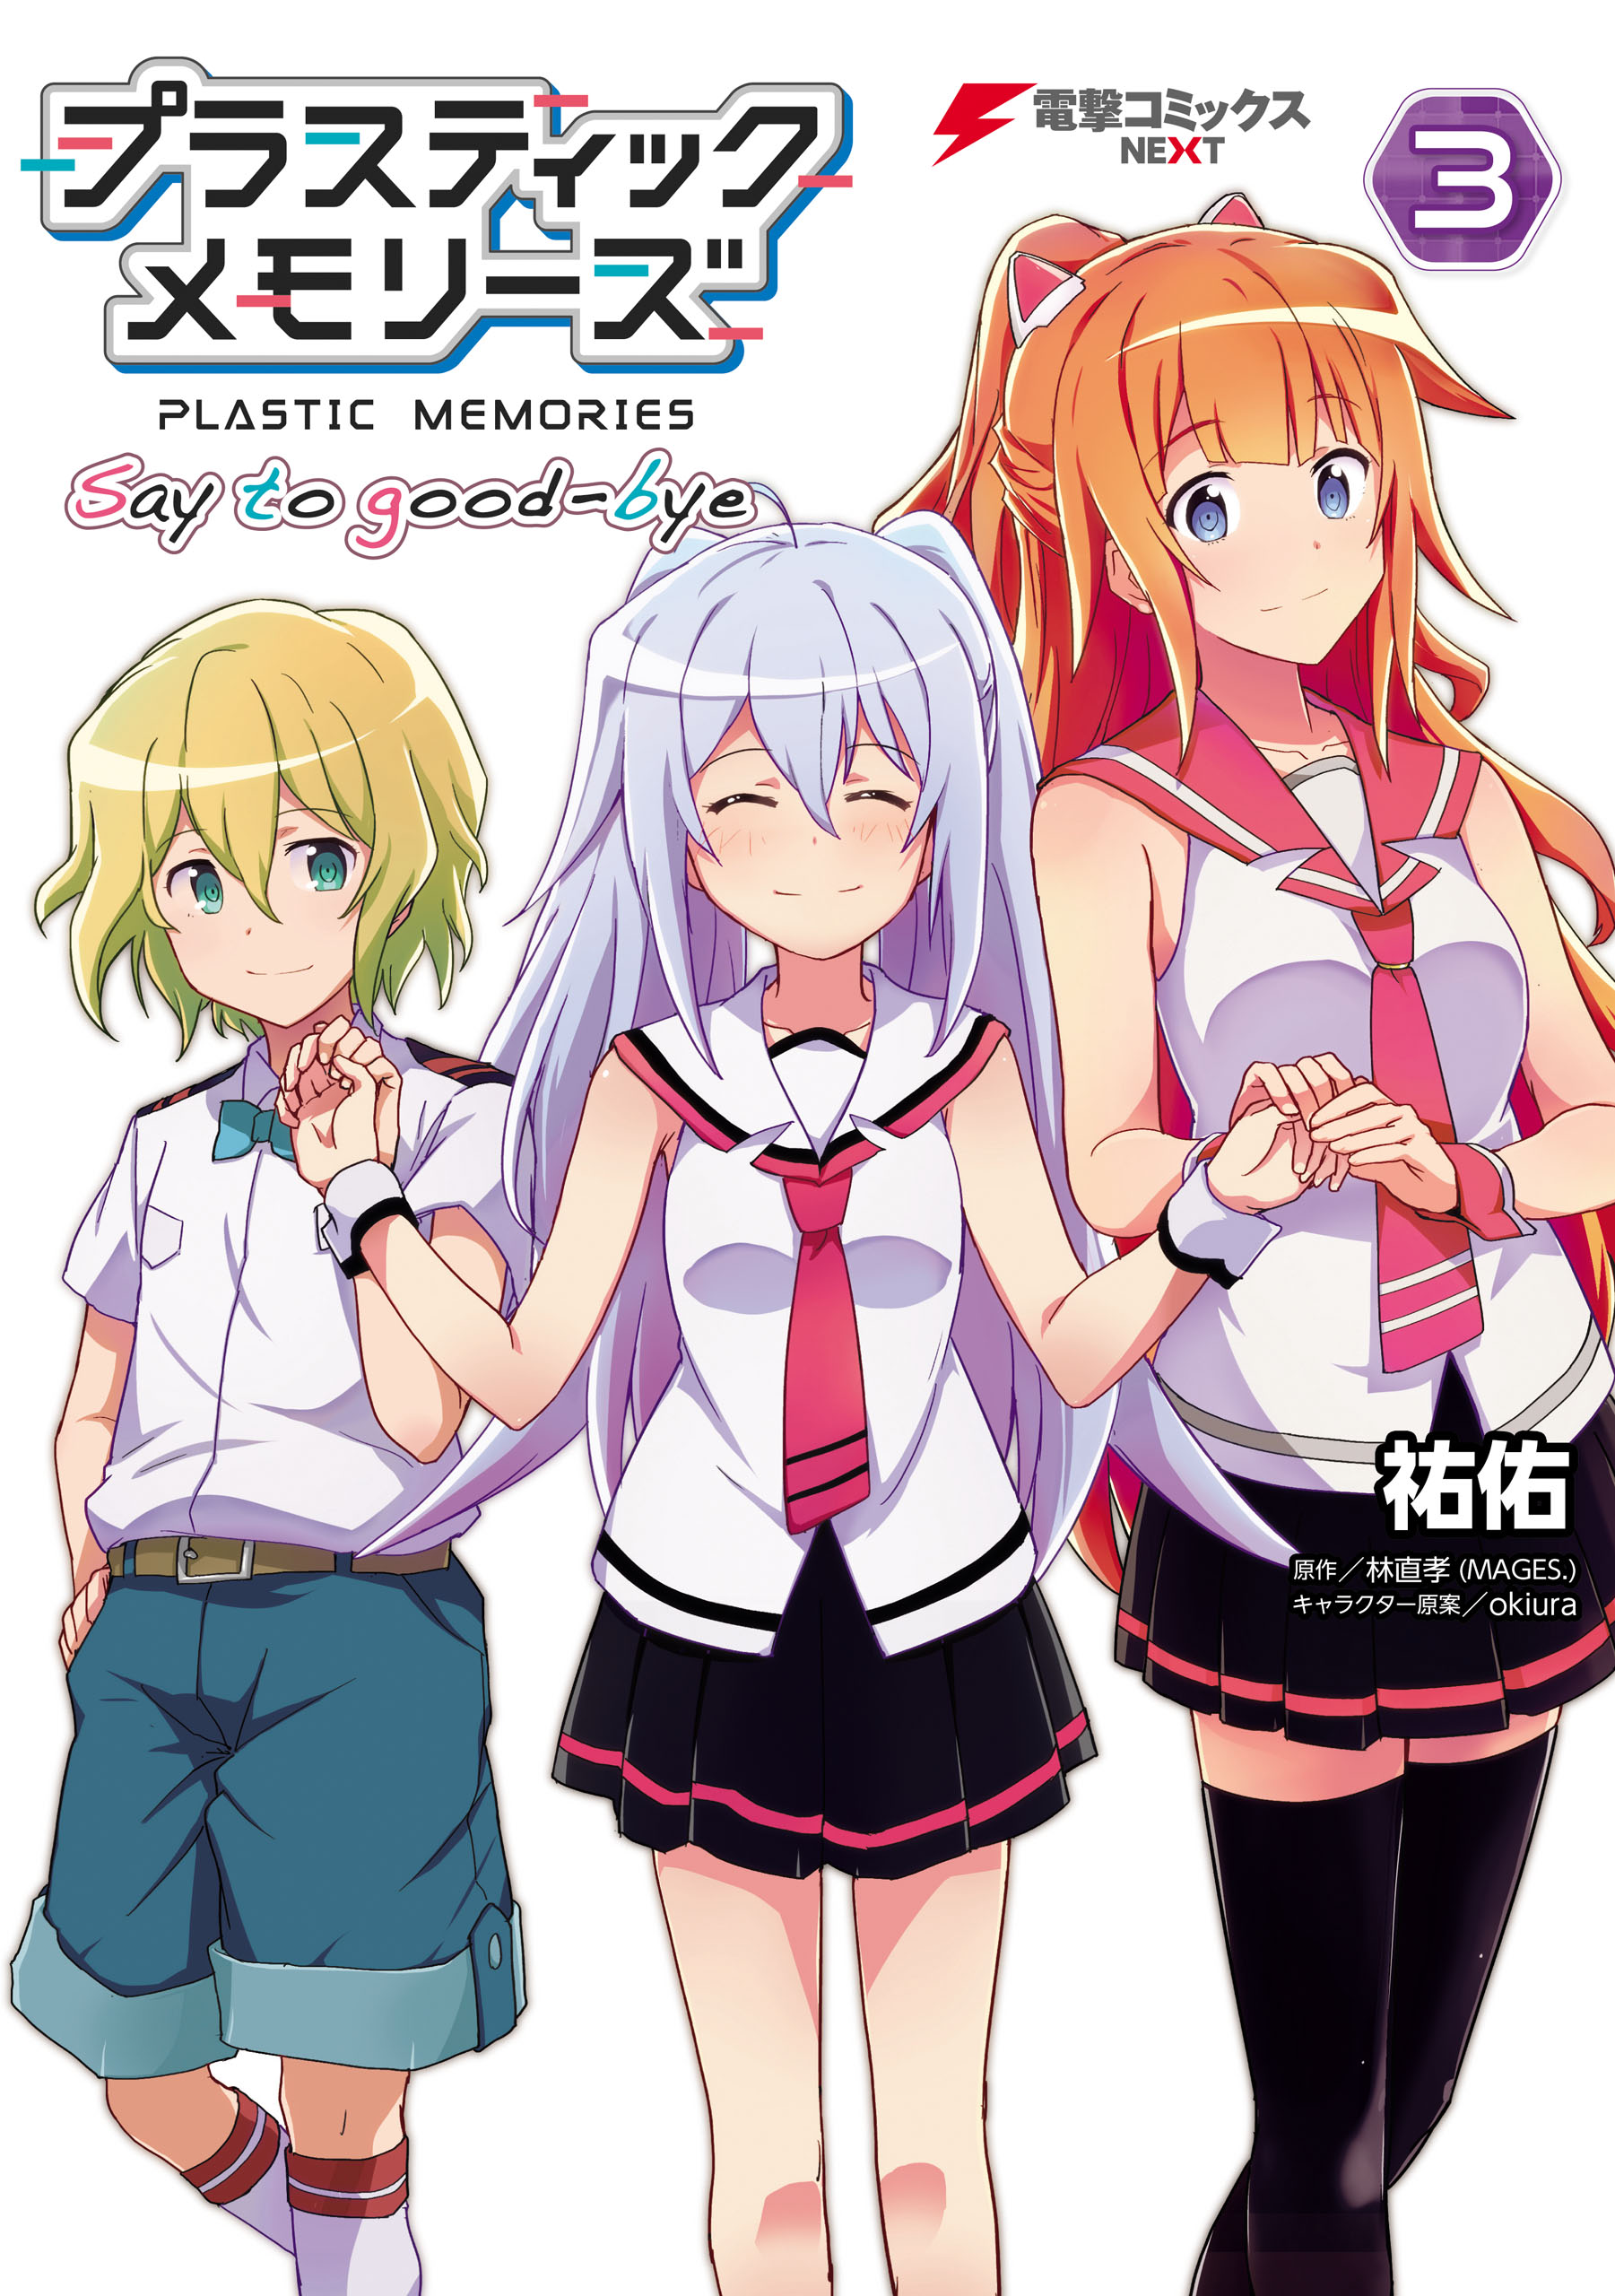 Plastic Memories: Say to good-bye - MangaDex